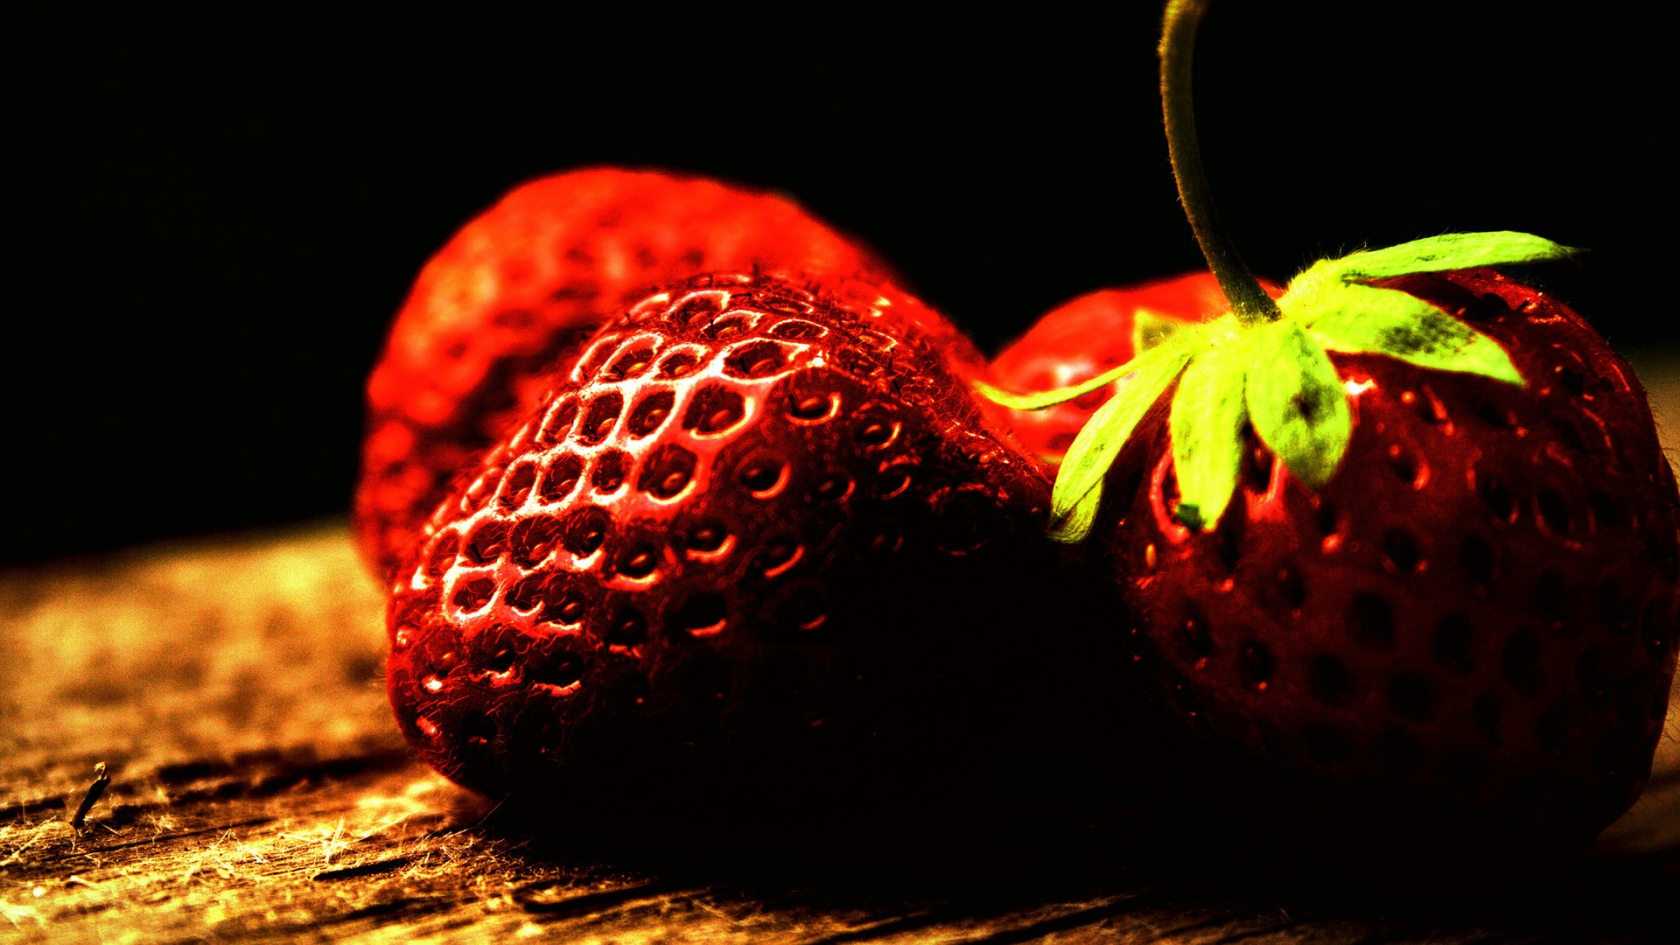 Strawberry for 1680 x 945 HDTV resolution